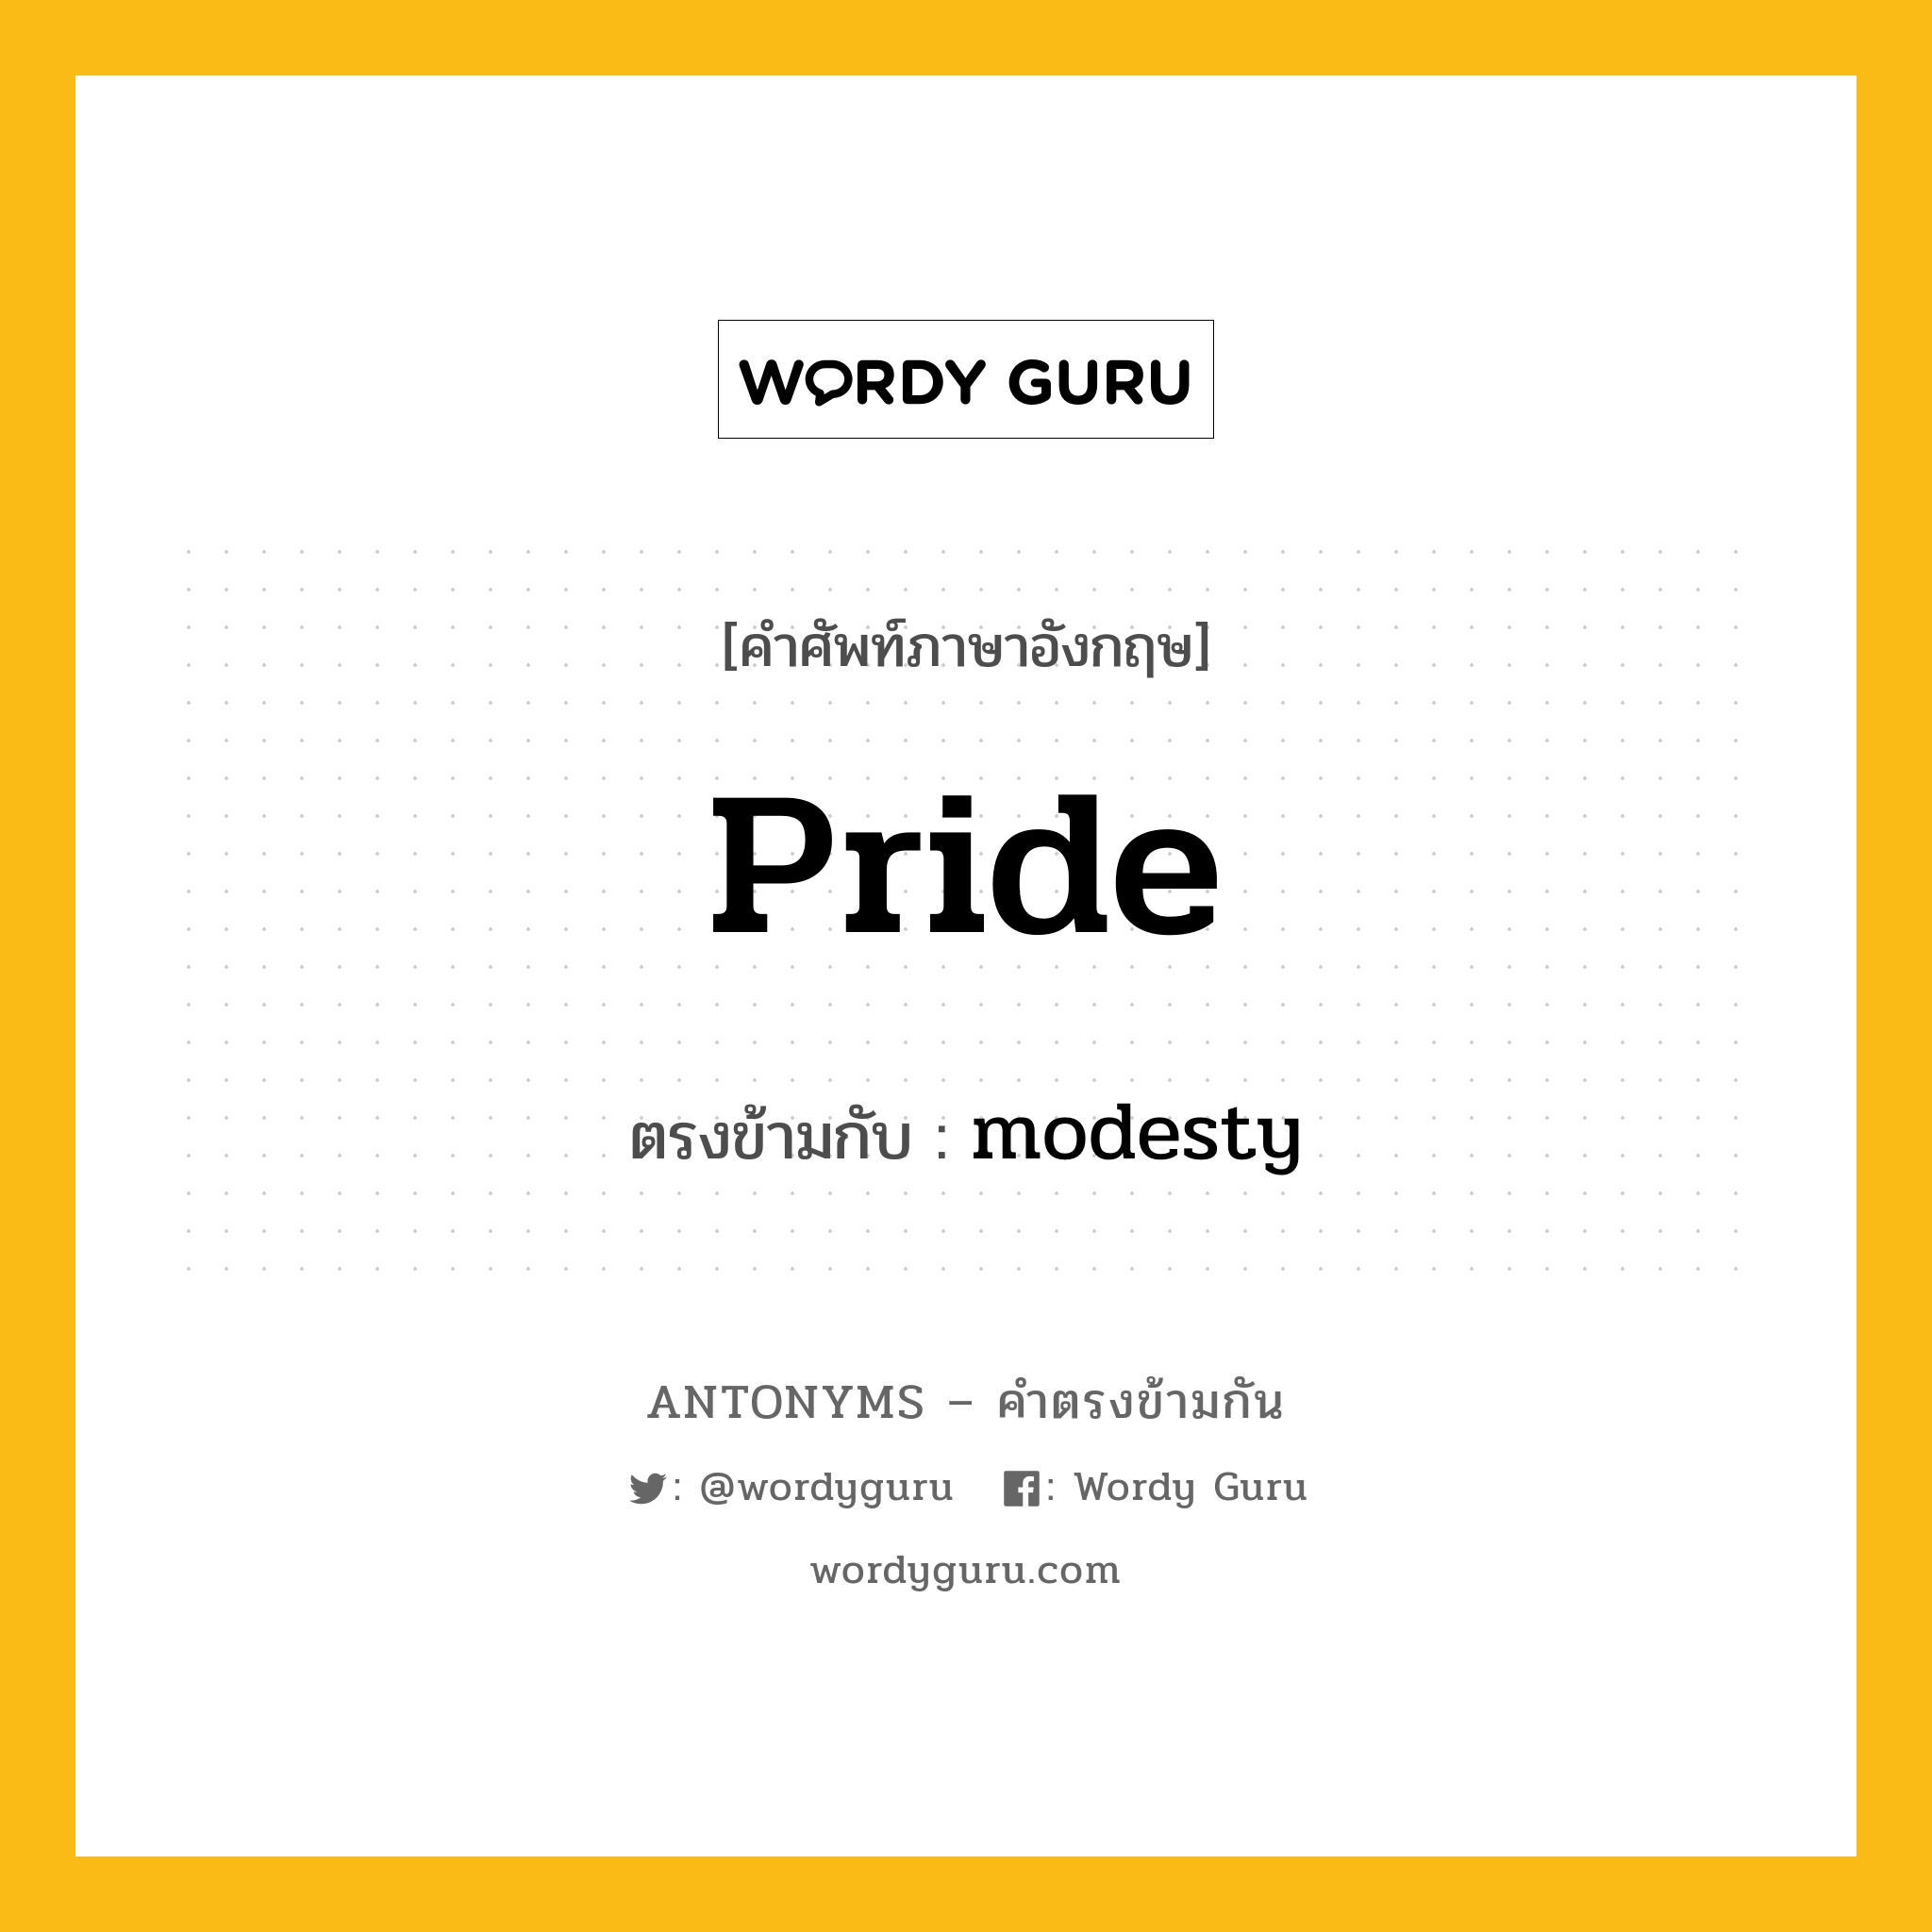 pride เป็นคำตรงข้ามกับคำไหนบ้าง?, คำศัพท์ภาษาอังกฤษ pride ตรงข้ามกับ modesty หมวด modesty